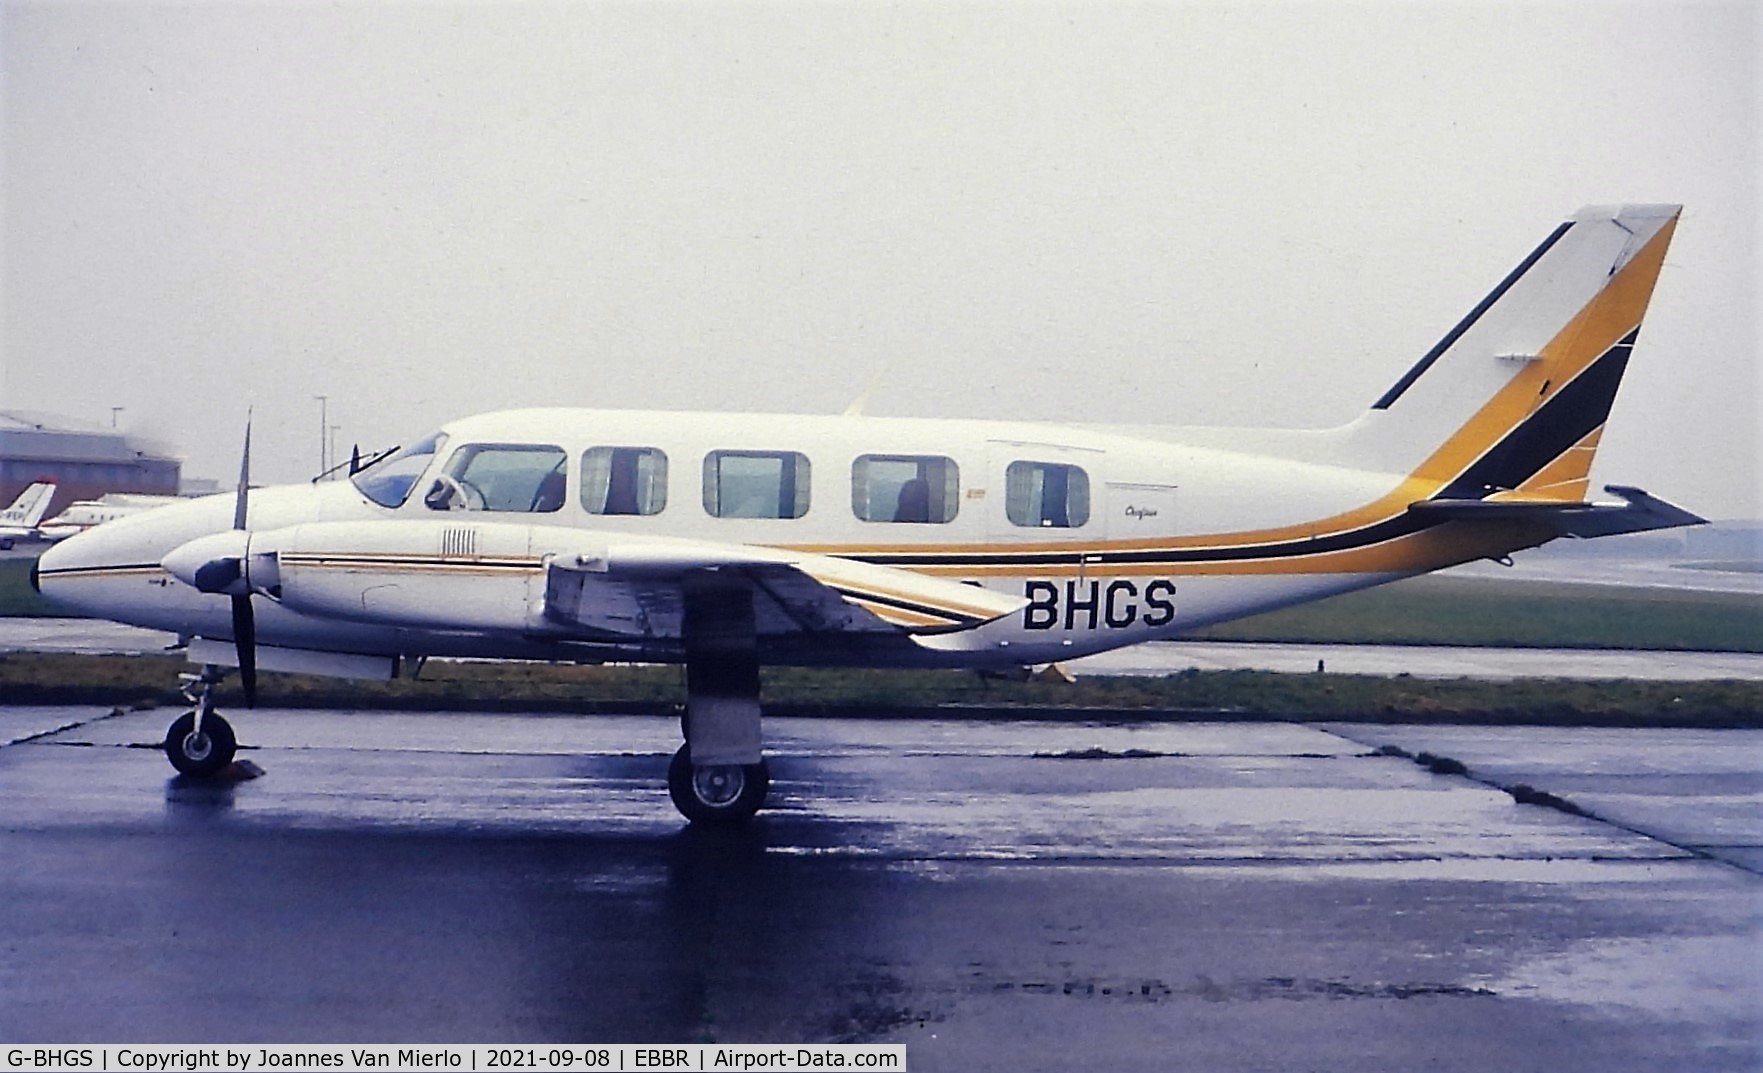 G-BHGS, 1979 Piper PA-31-350 Chieftain C/N 31-7952245, Slide scan